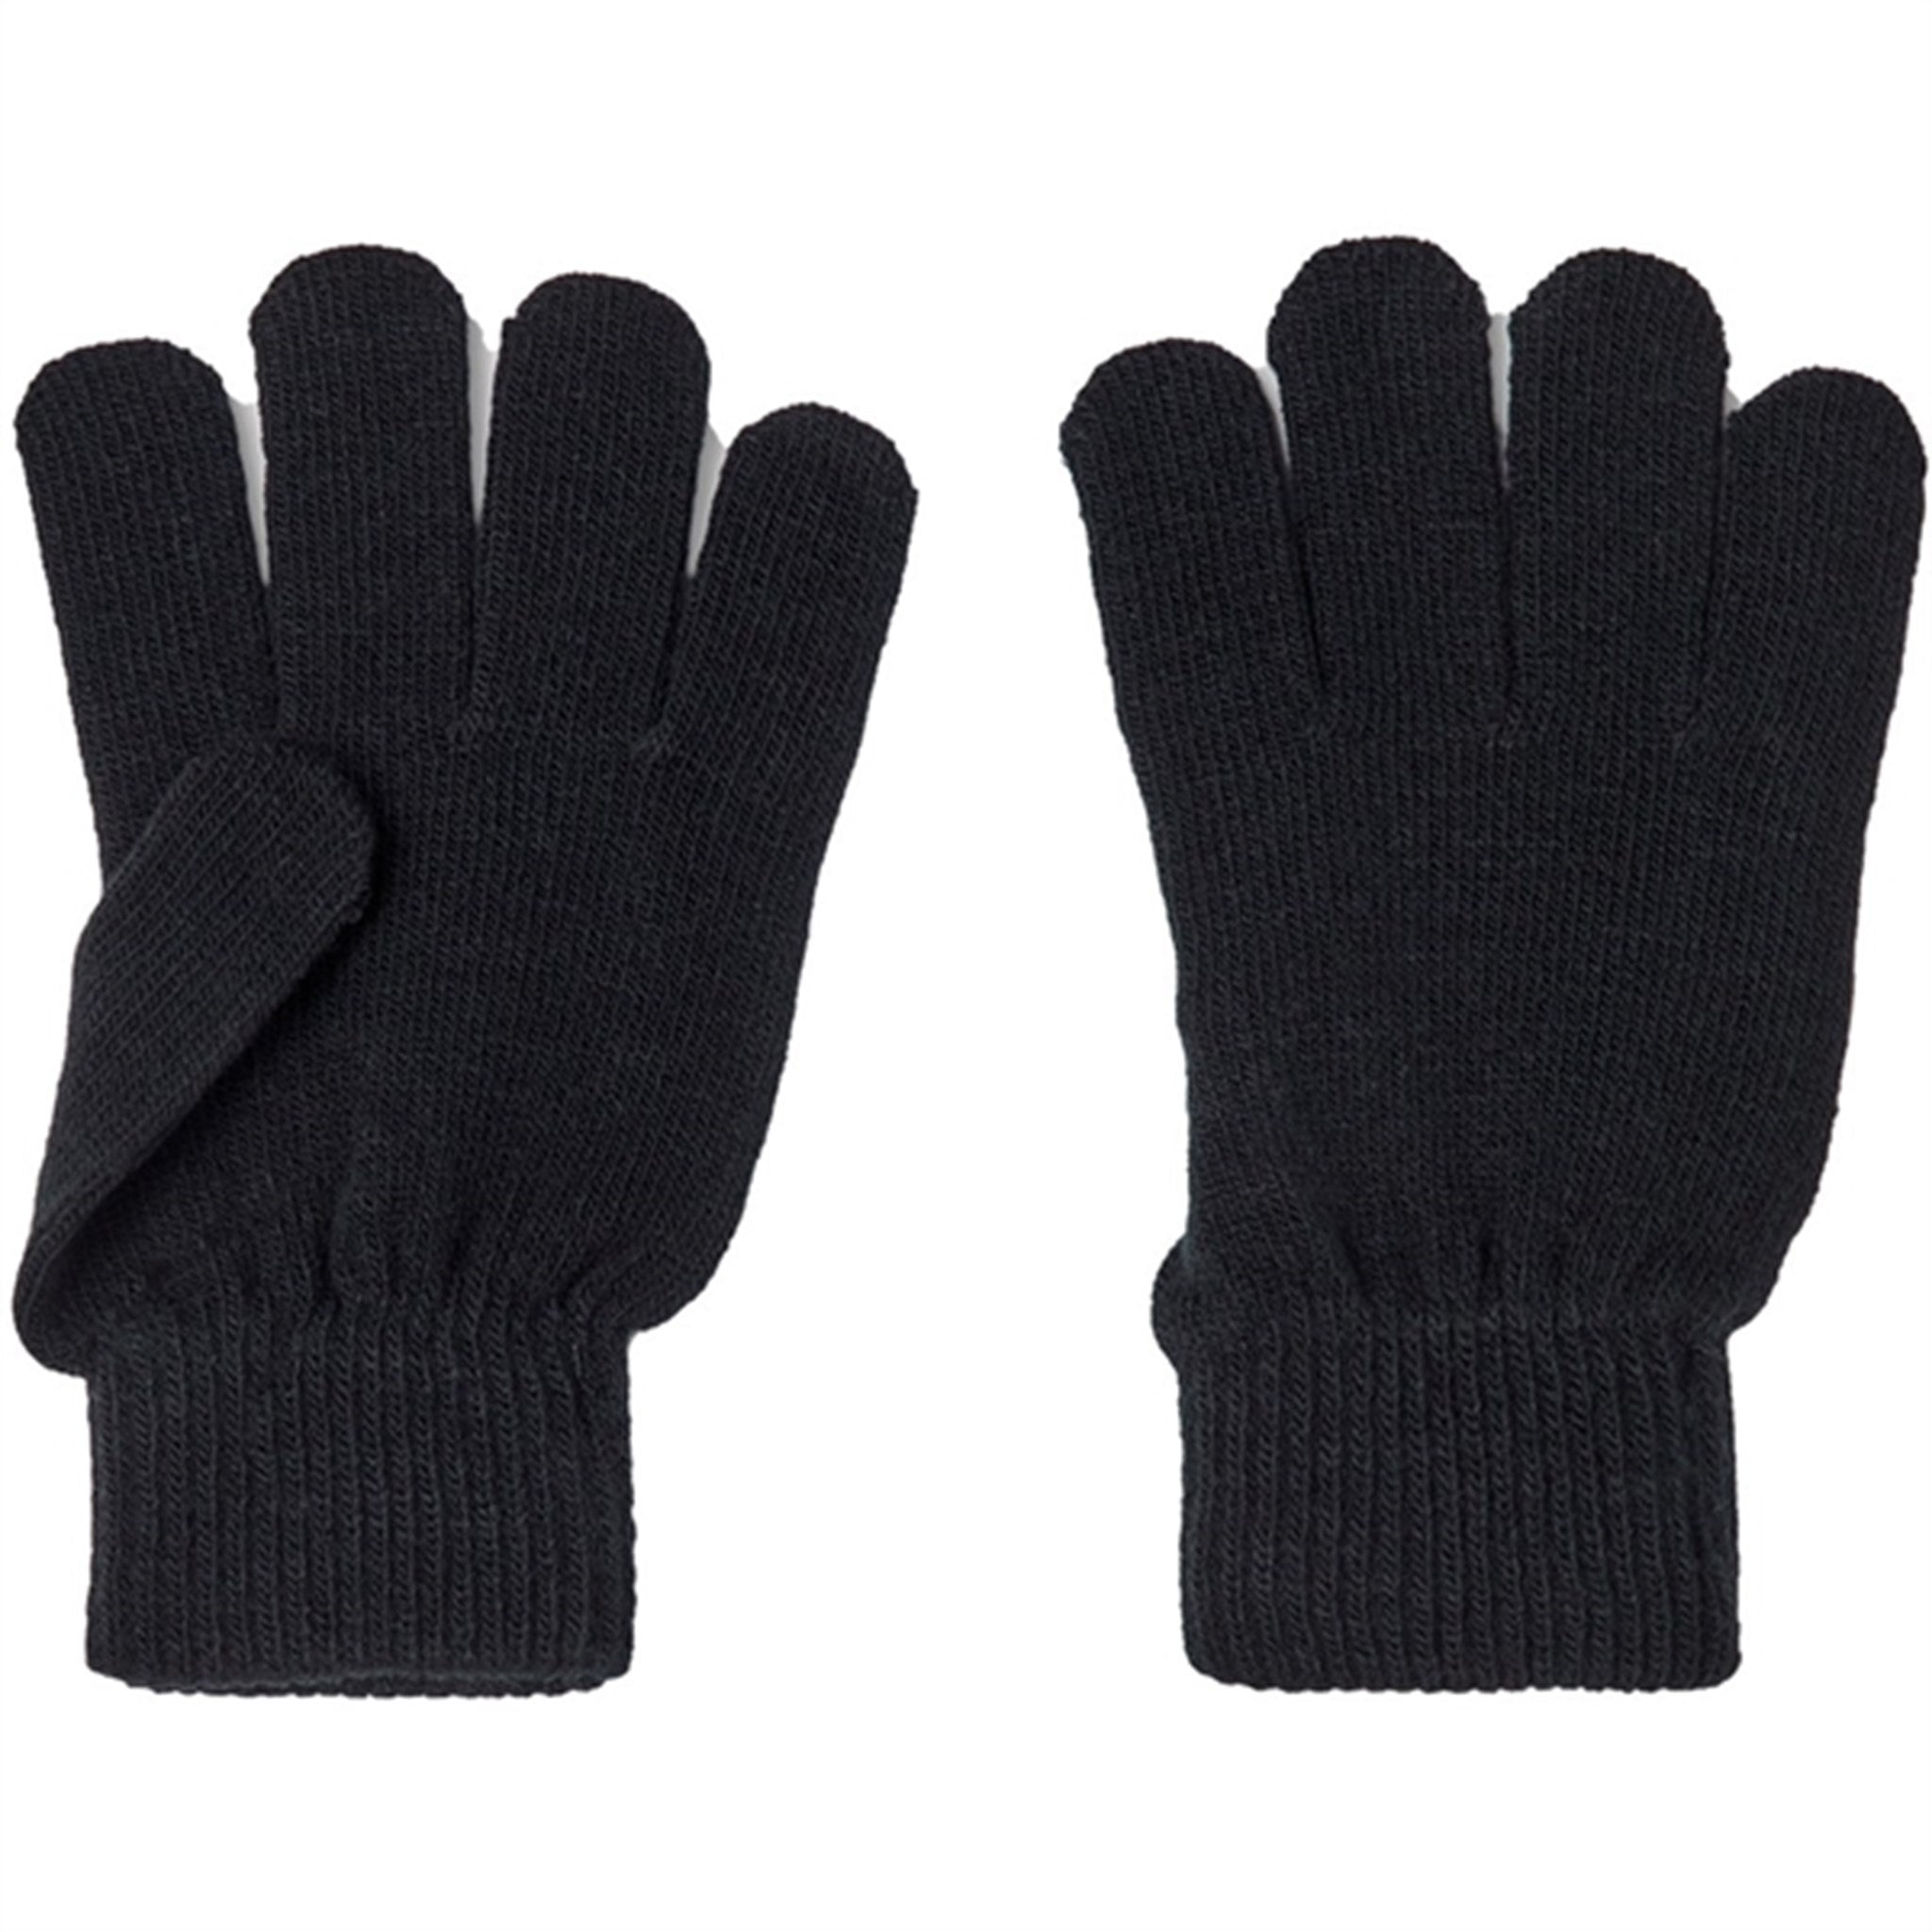 Name it Black Magic Gloves